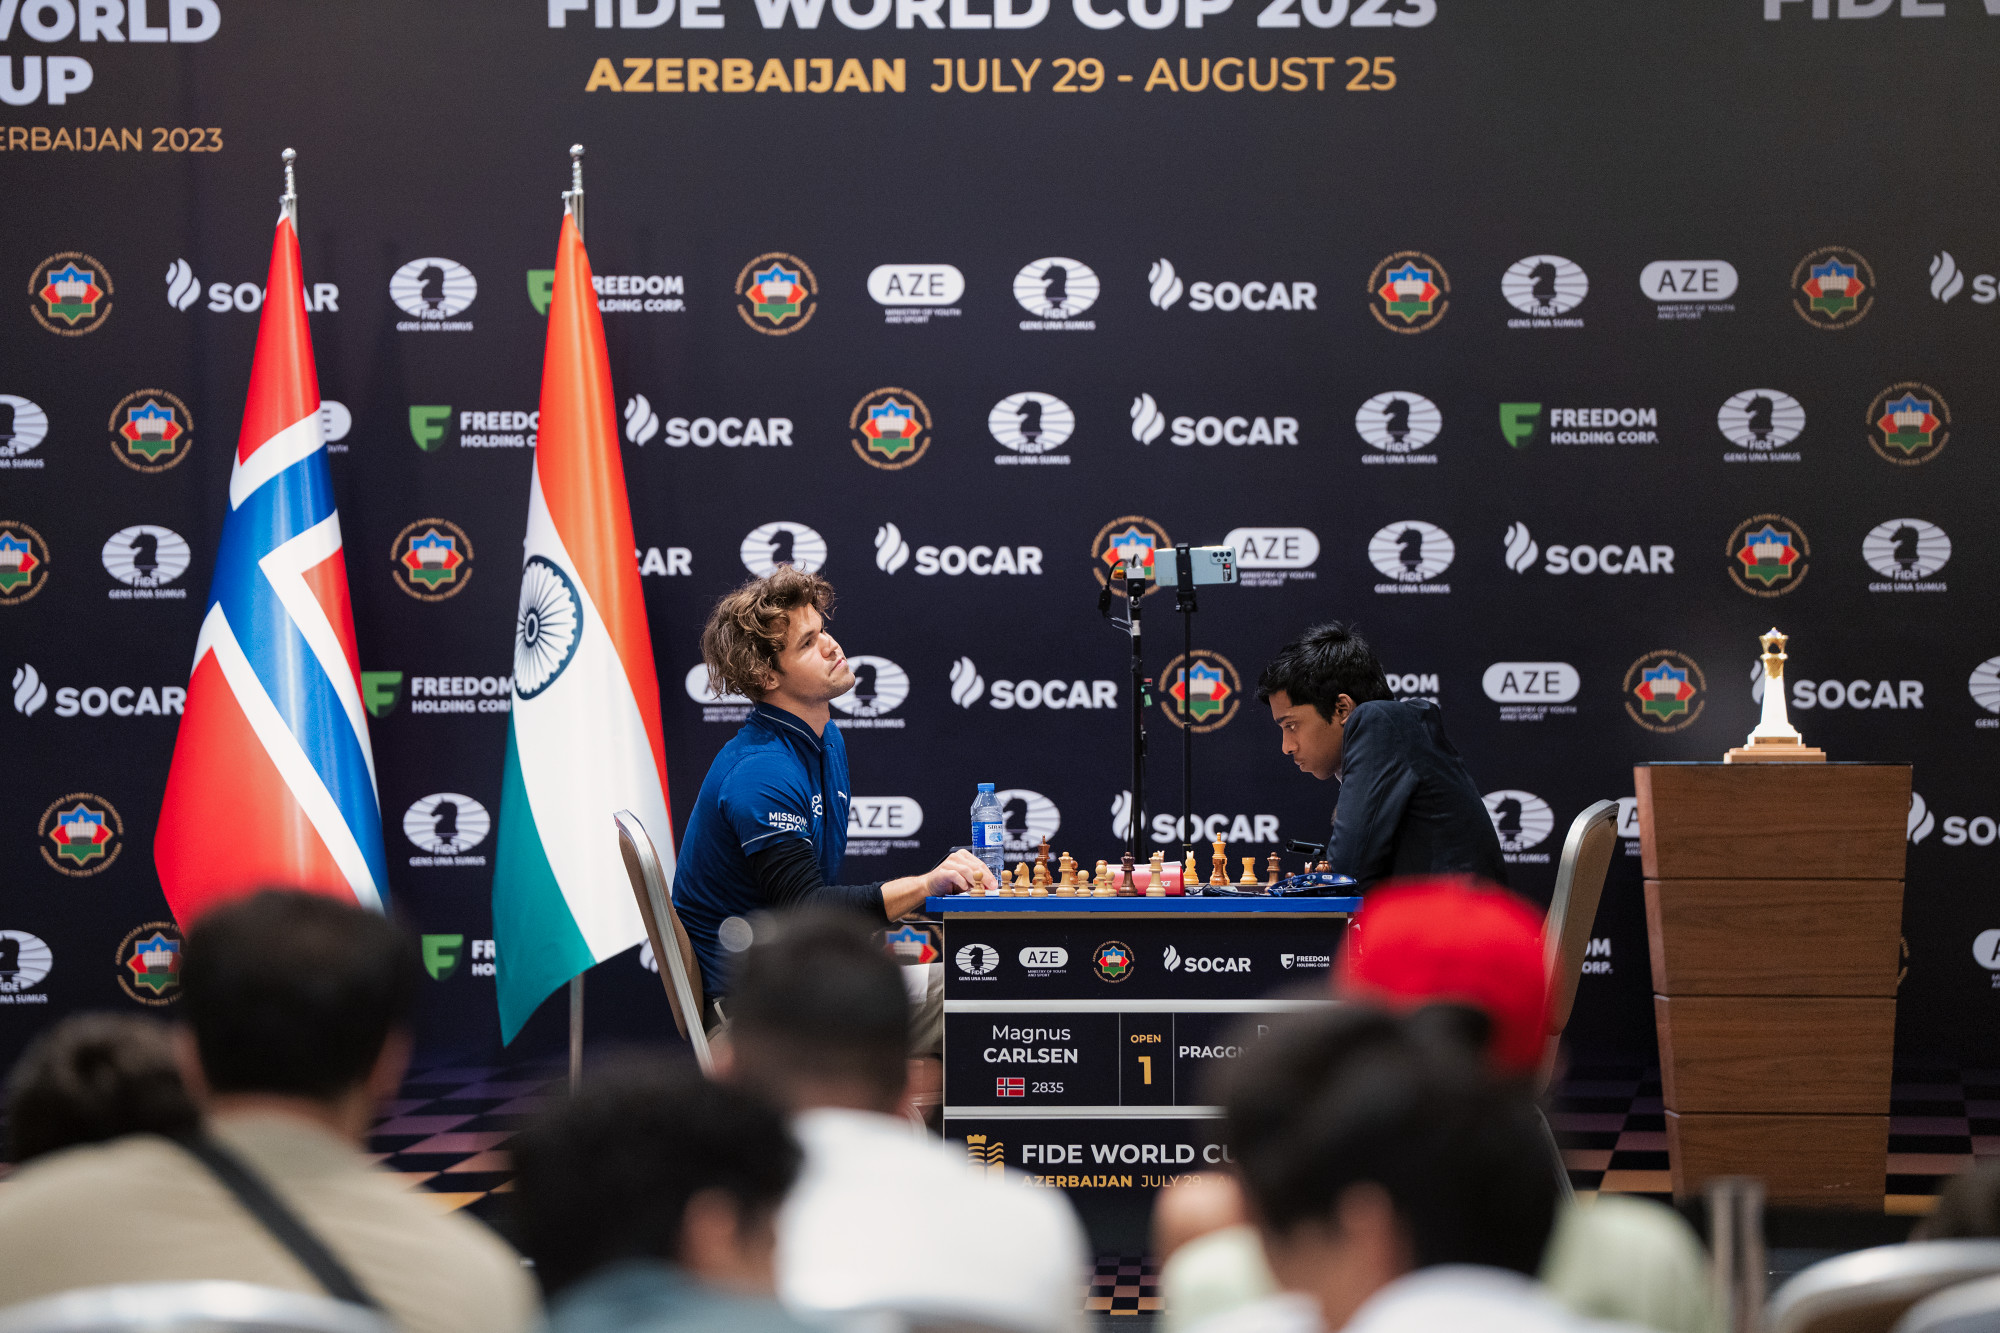 LIVE: Praggnanandhaa Vs Carlsen, World Chess Championship 2023 LIVE